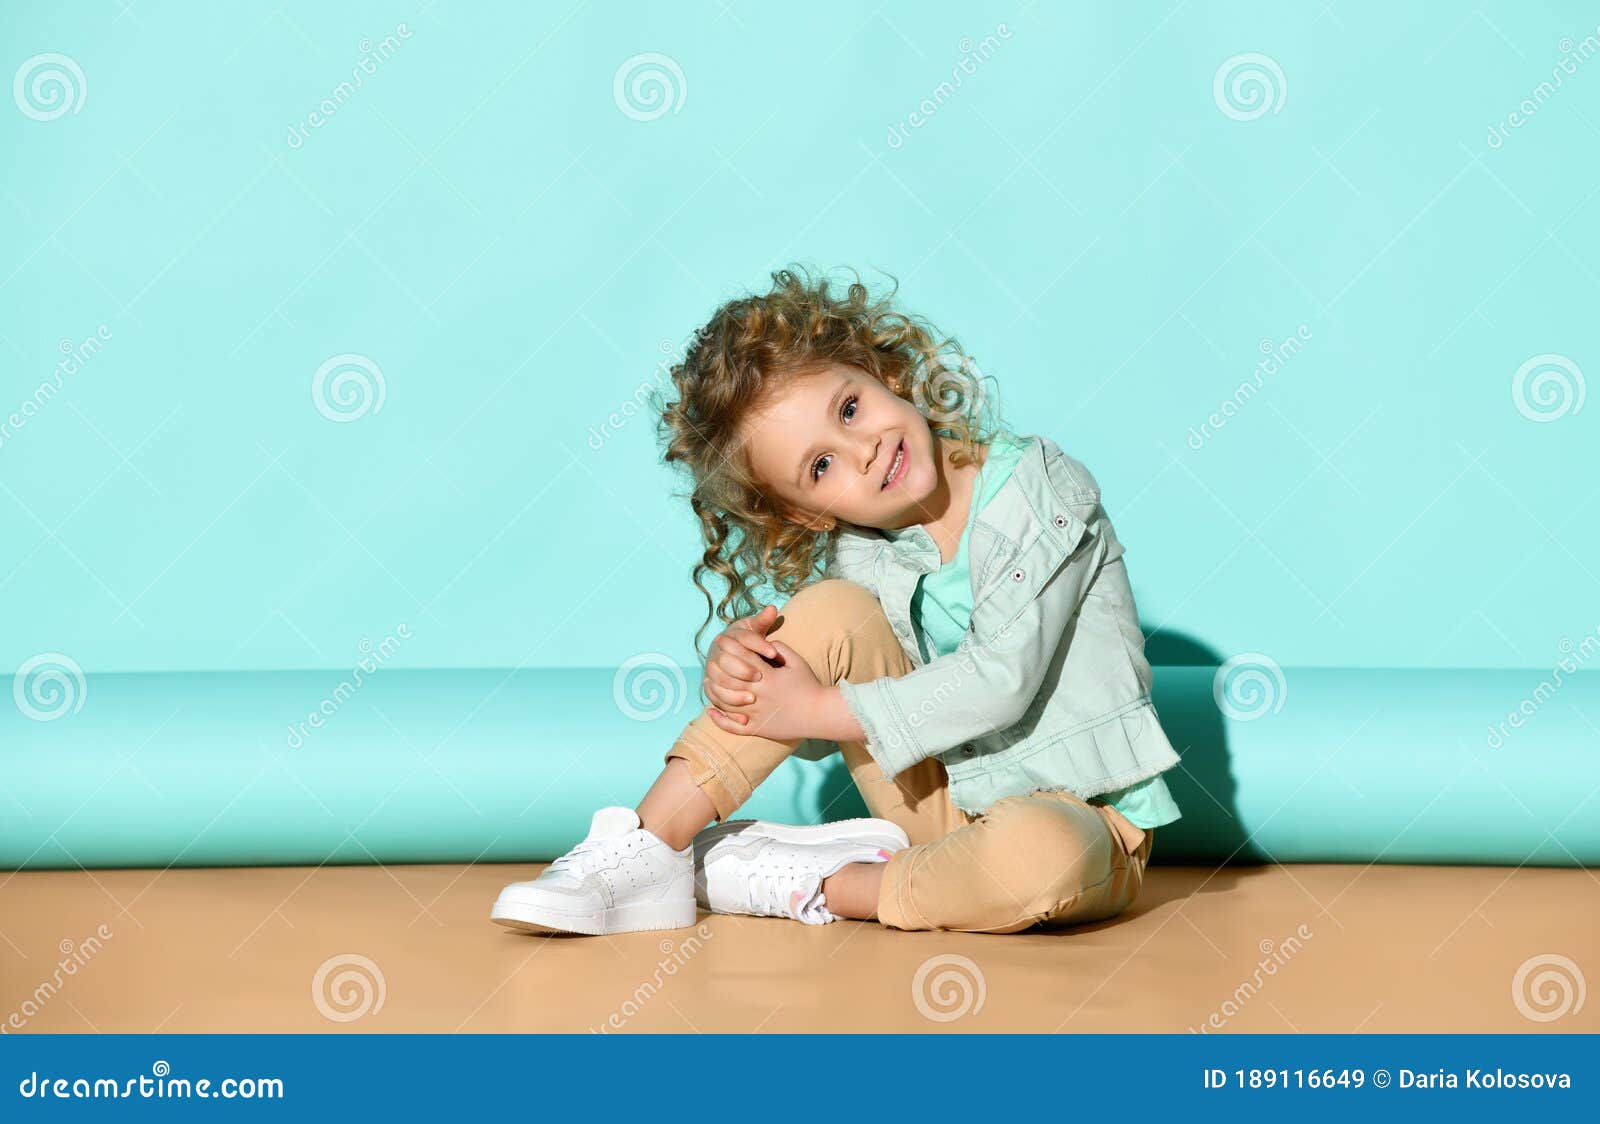 little girls sits knee 123RF